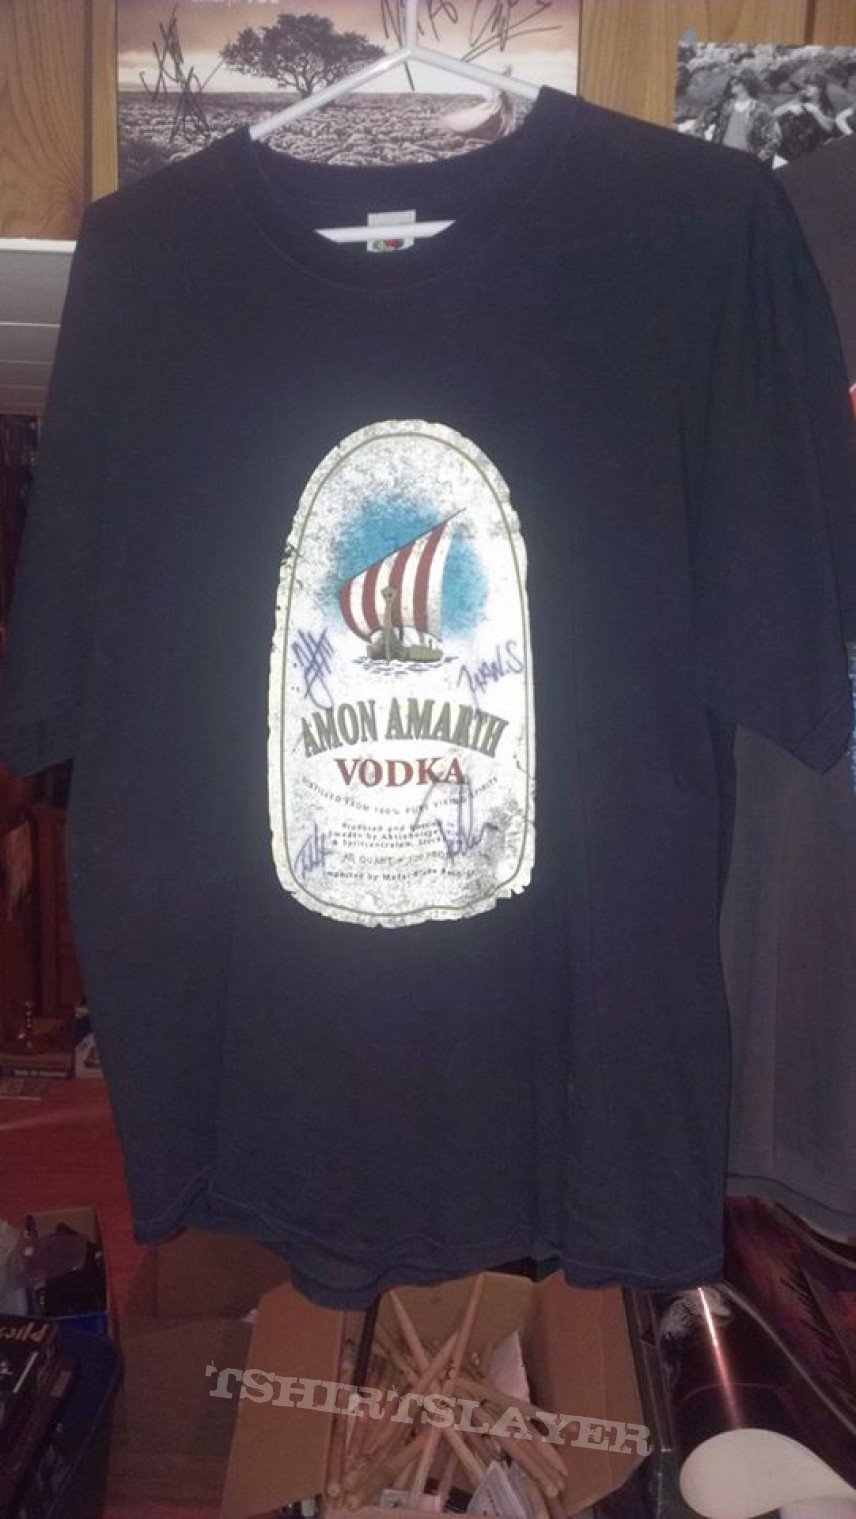 Amon Amarth - Vodka shirt